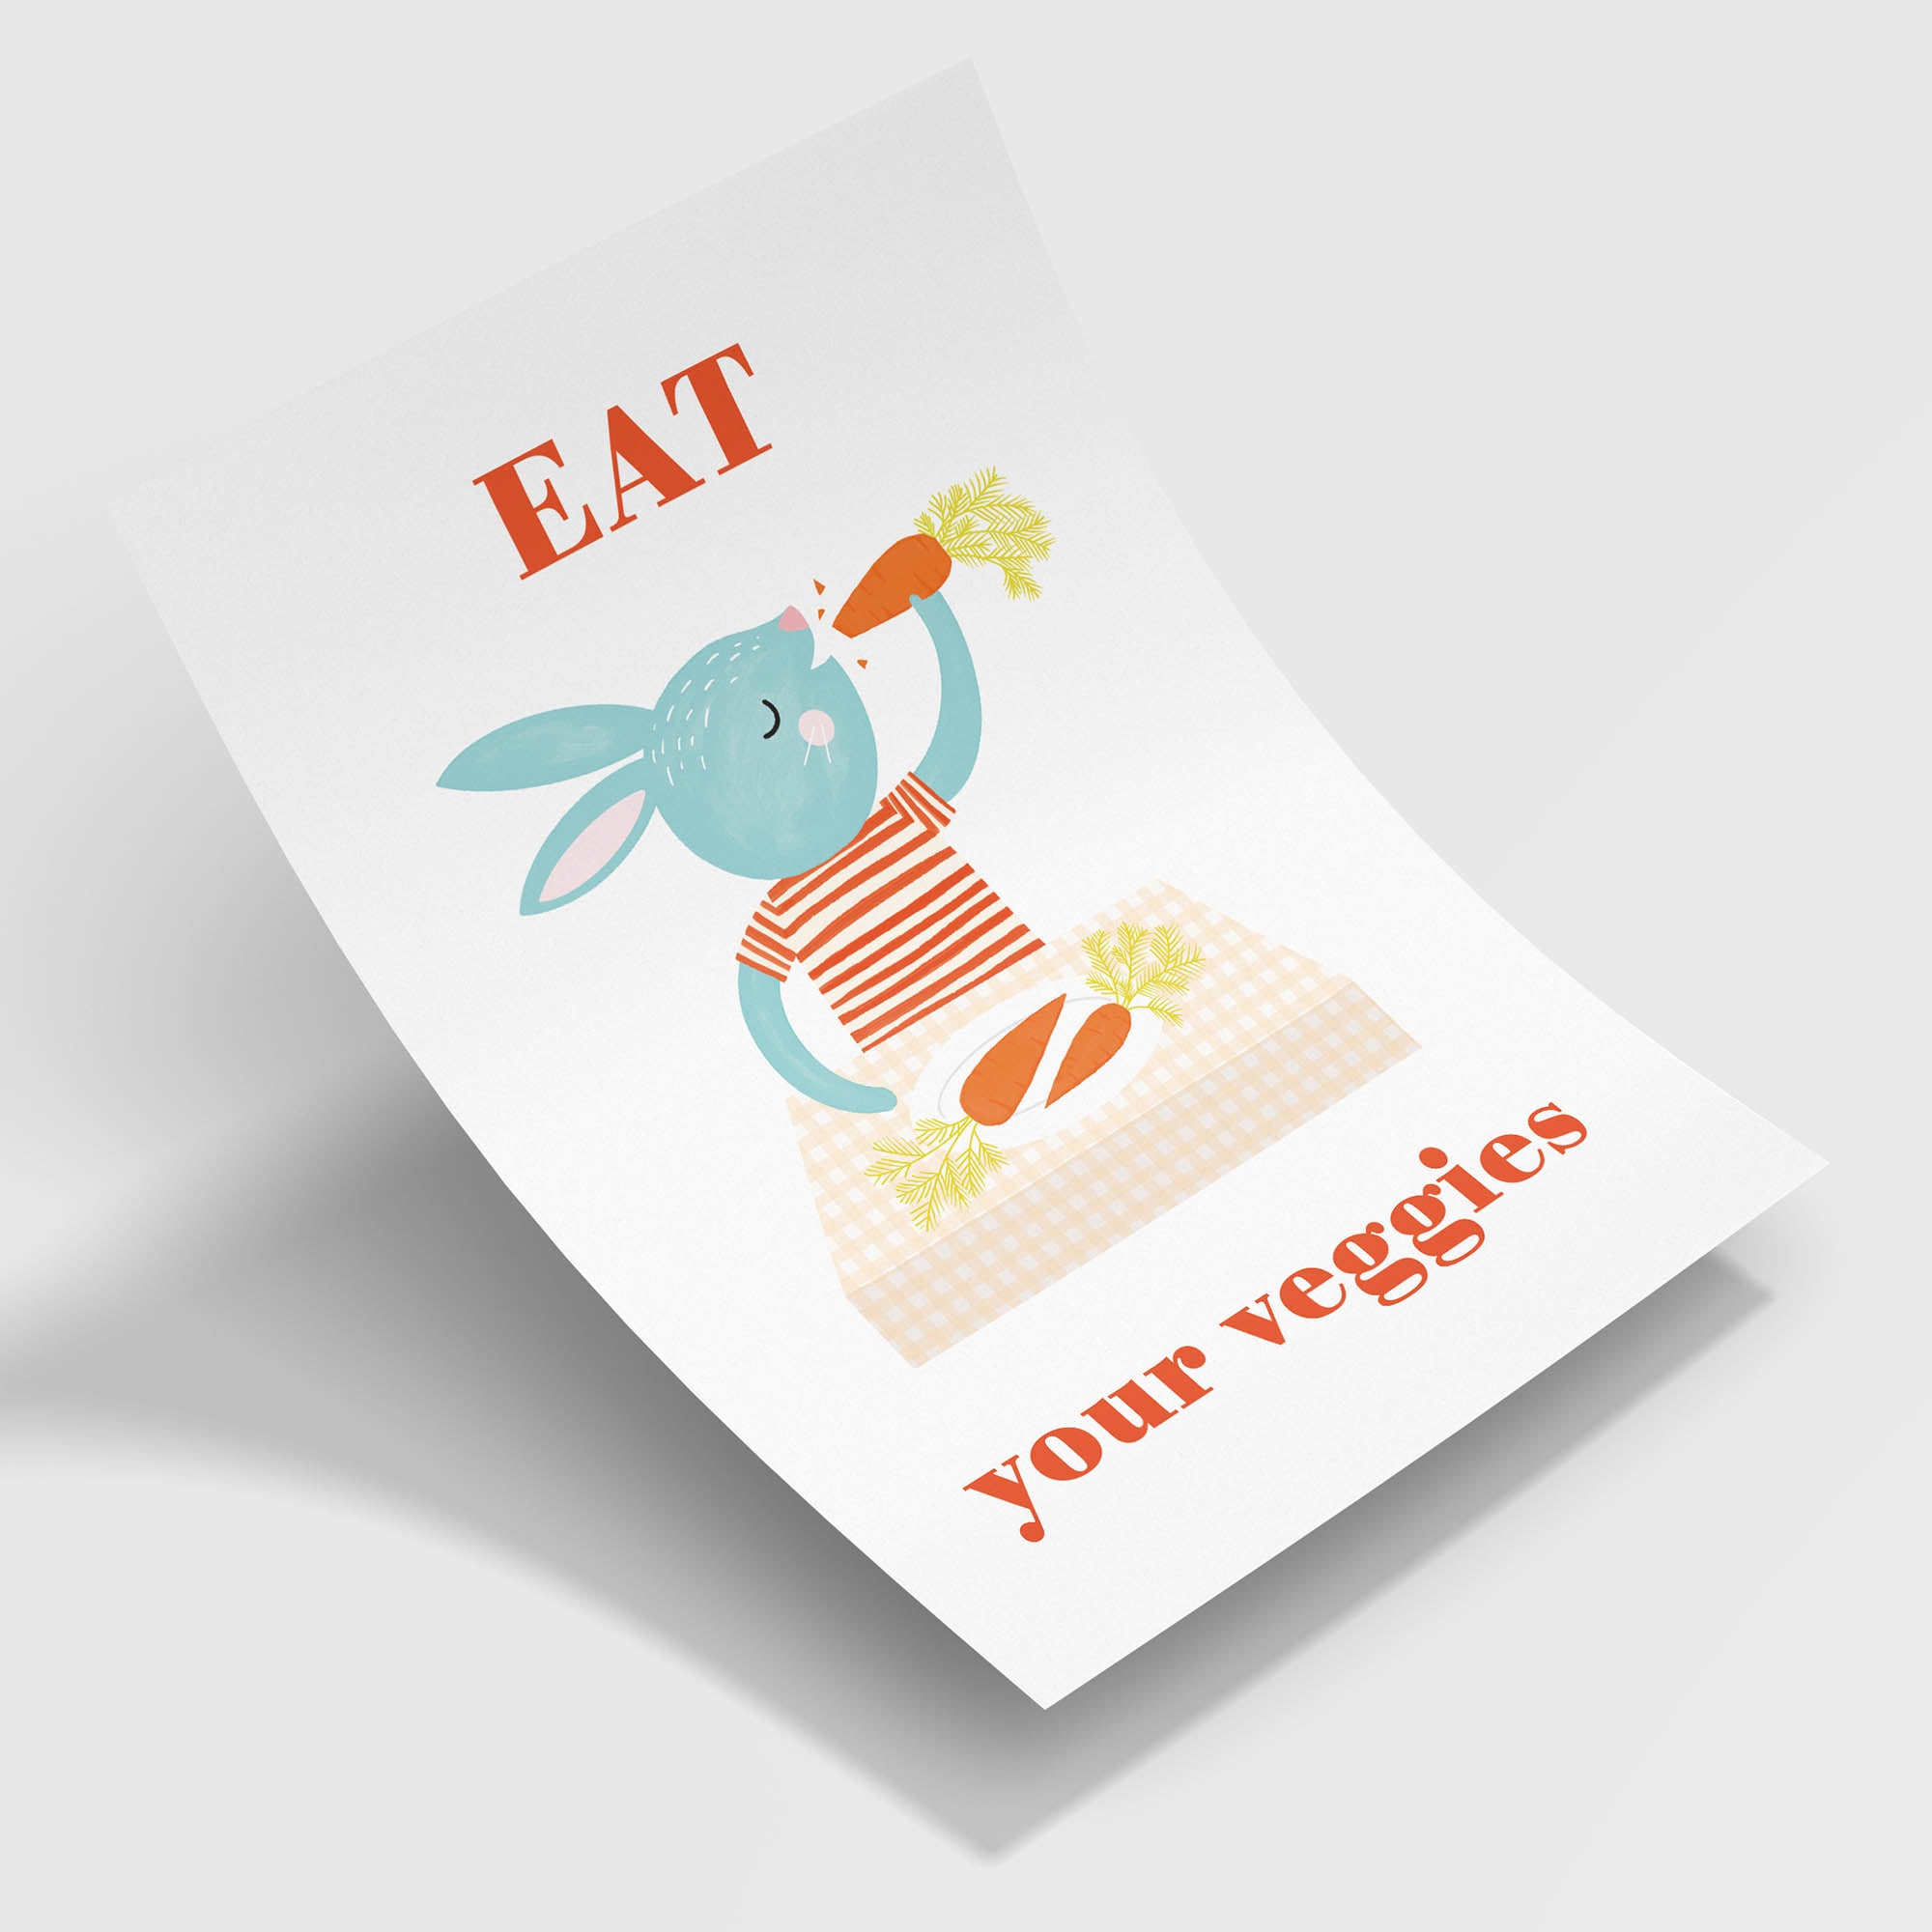 Eat Your Veggies Fine Art Print | Nora Aoyagi